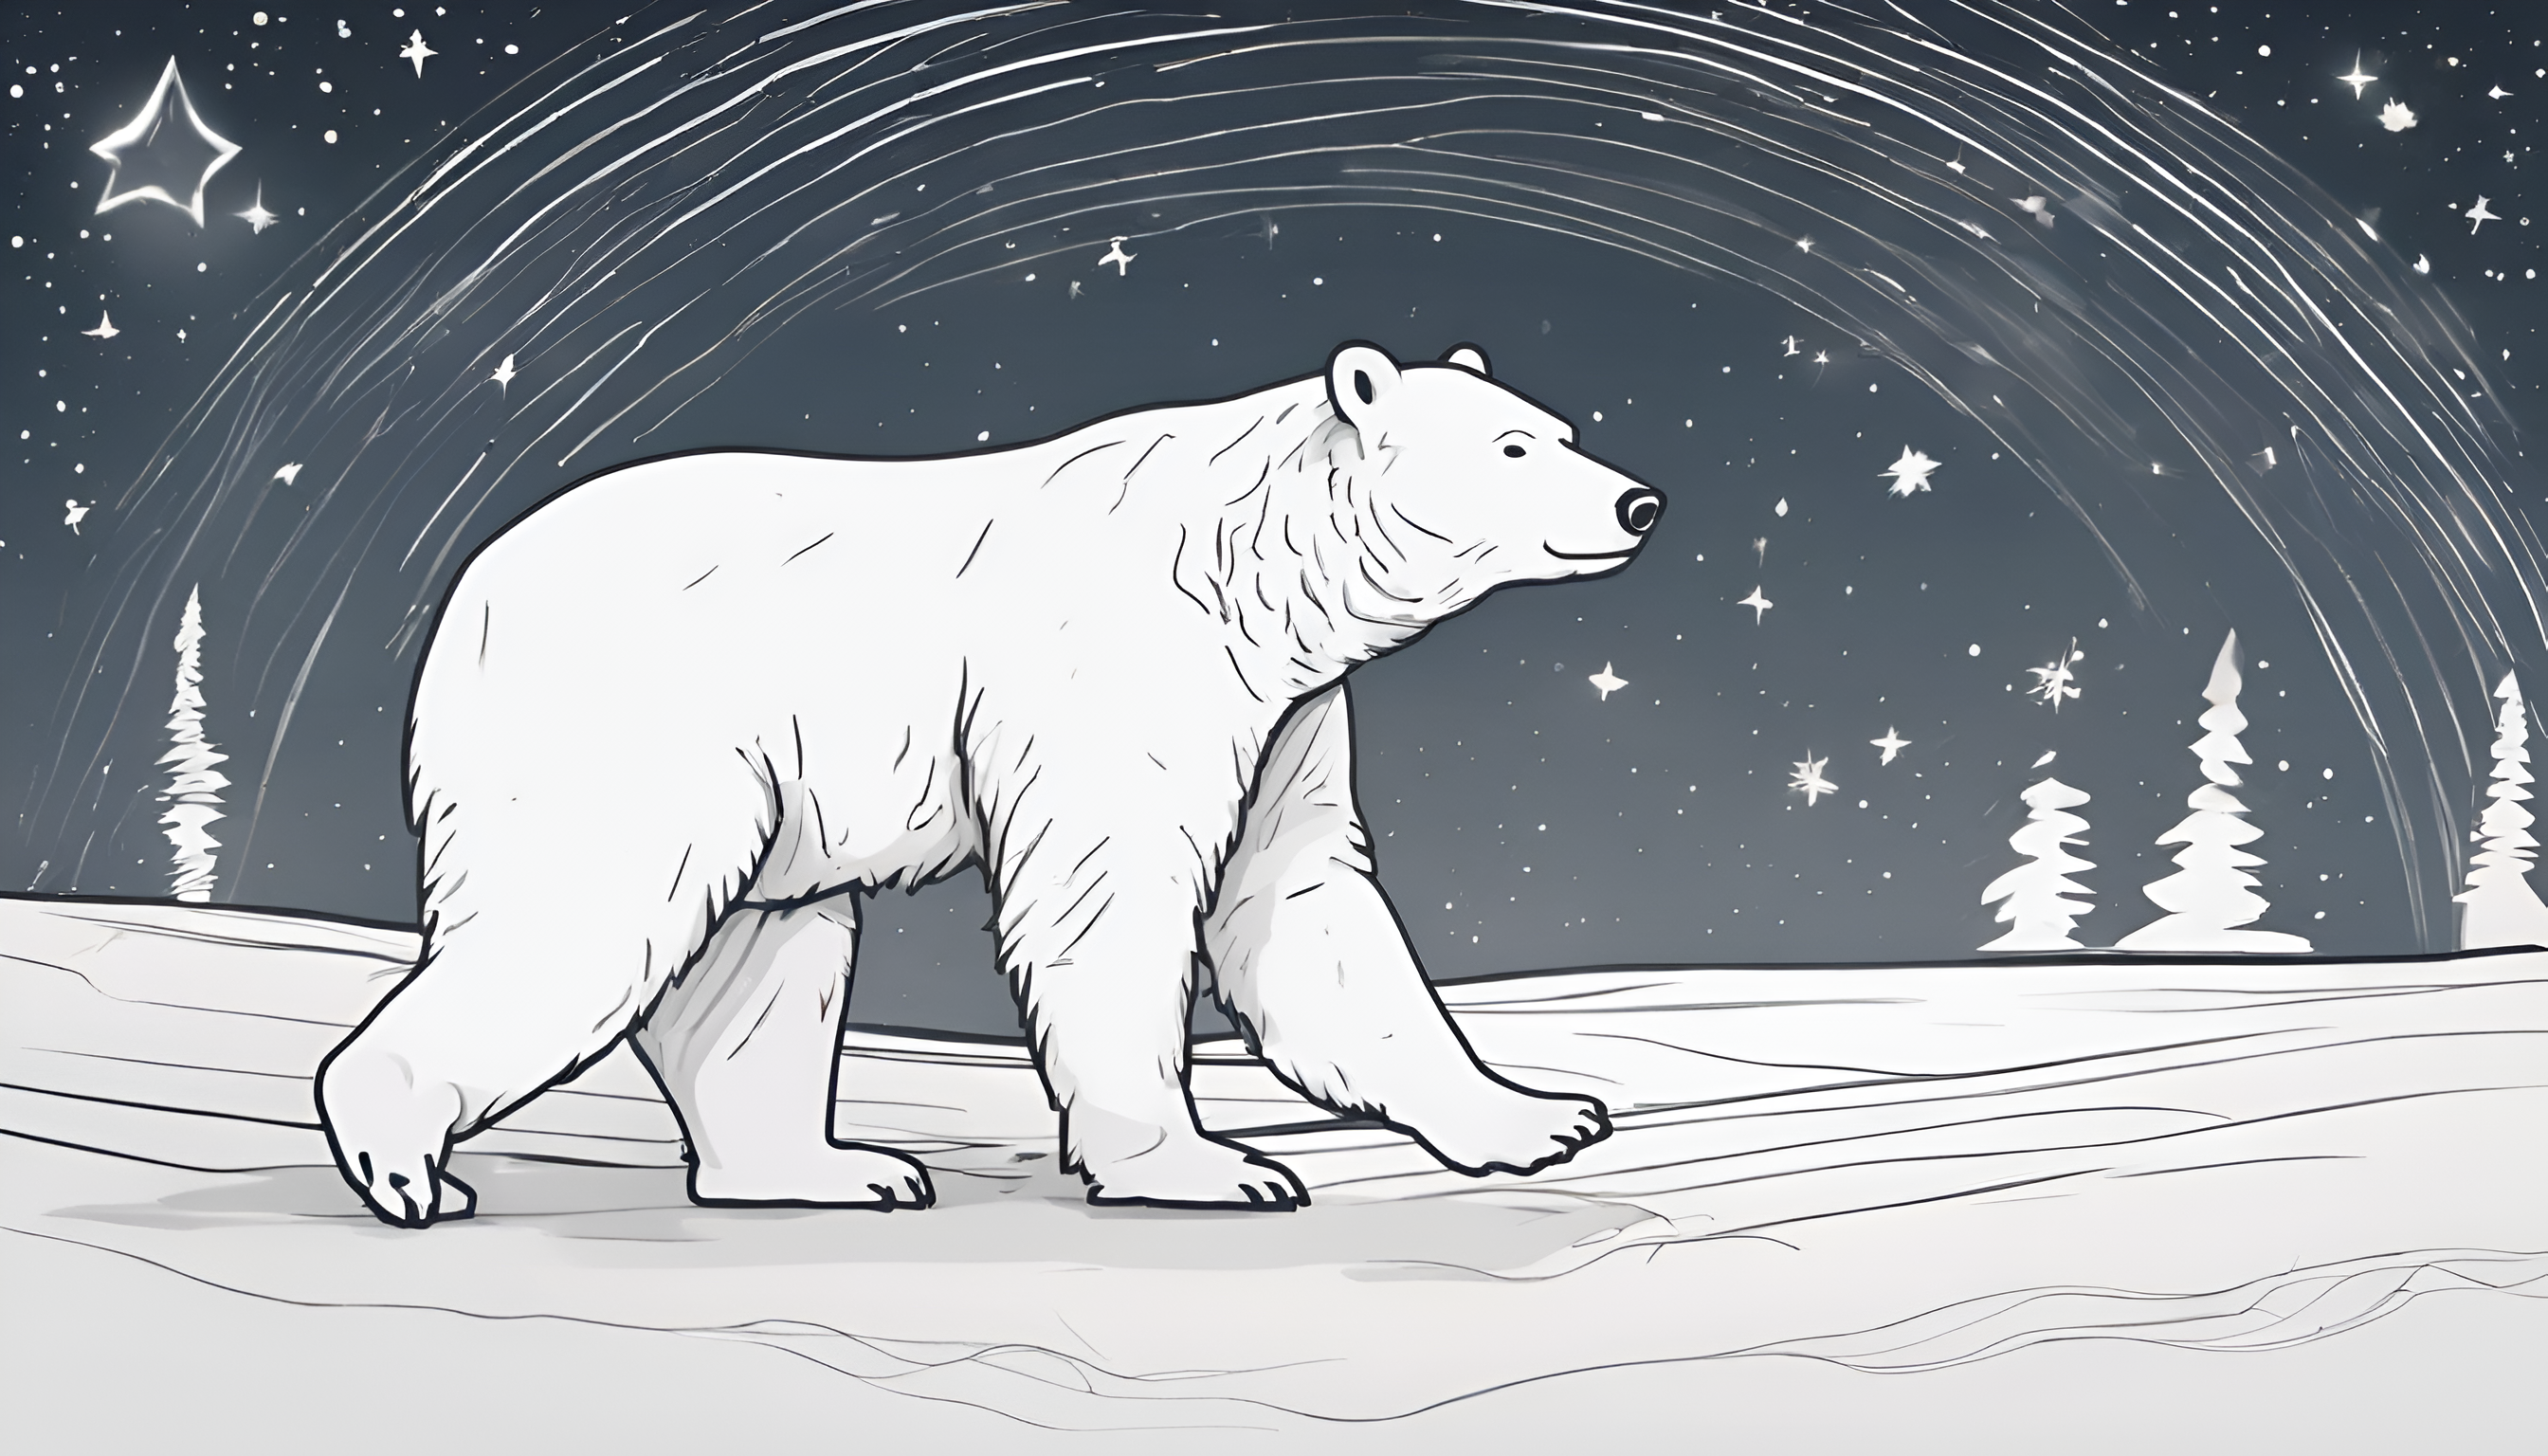 0 The white bear is walking. A polar star shining in esrgan-v1-x2plus